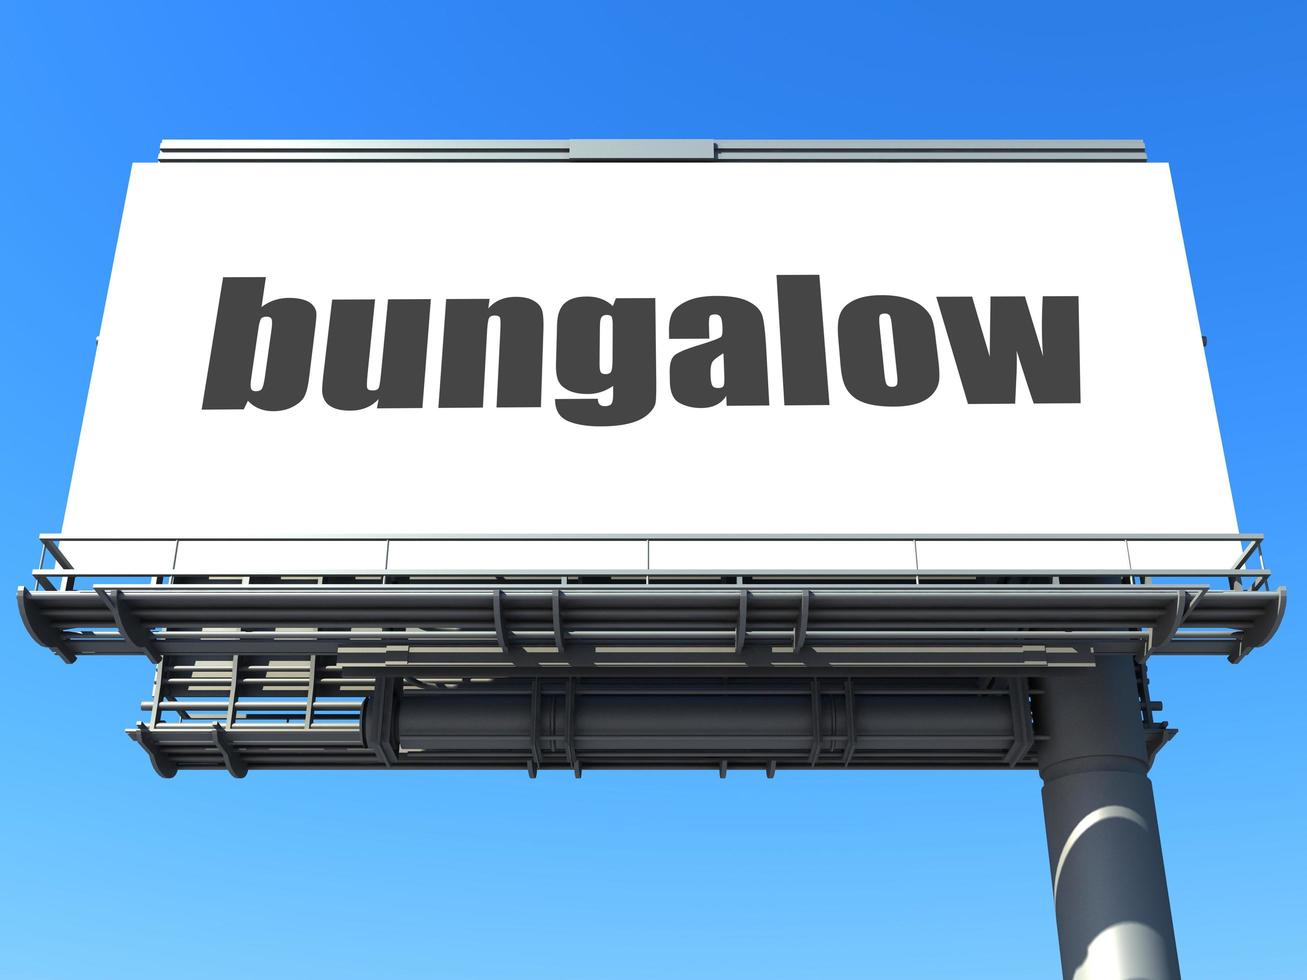 palabra de bungalow en cartelera foto